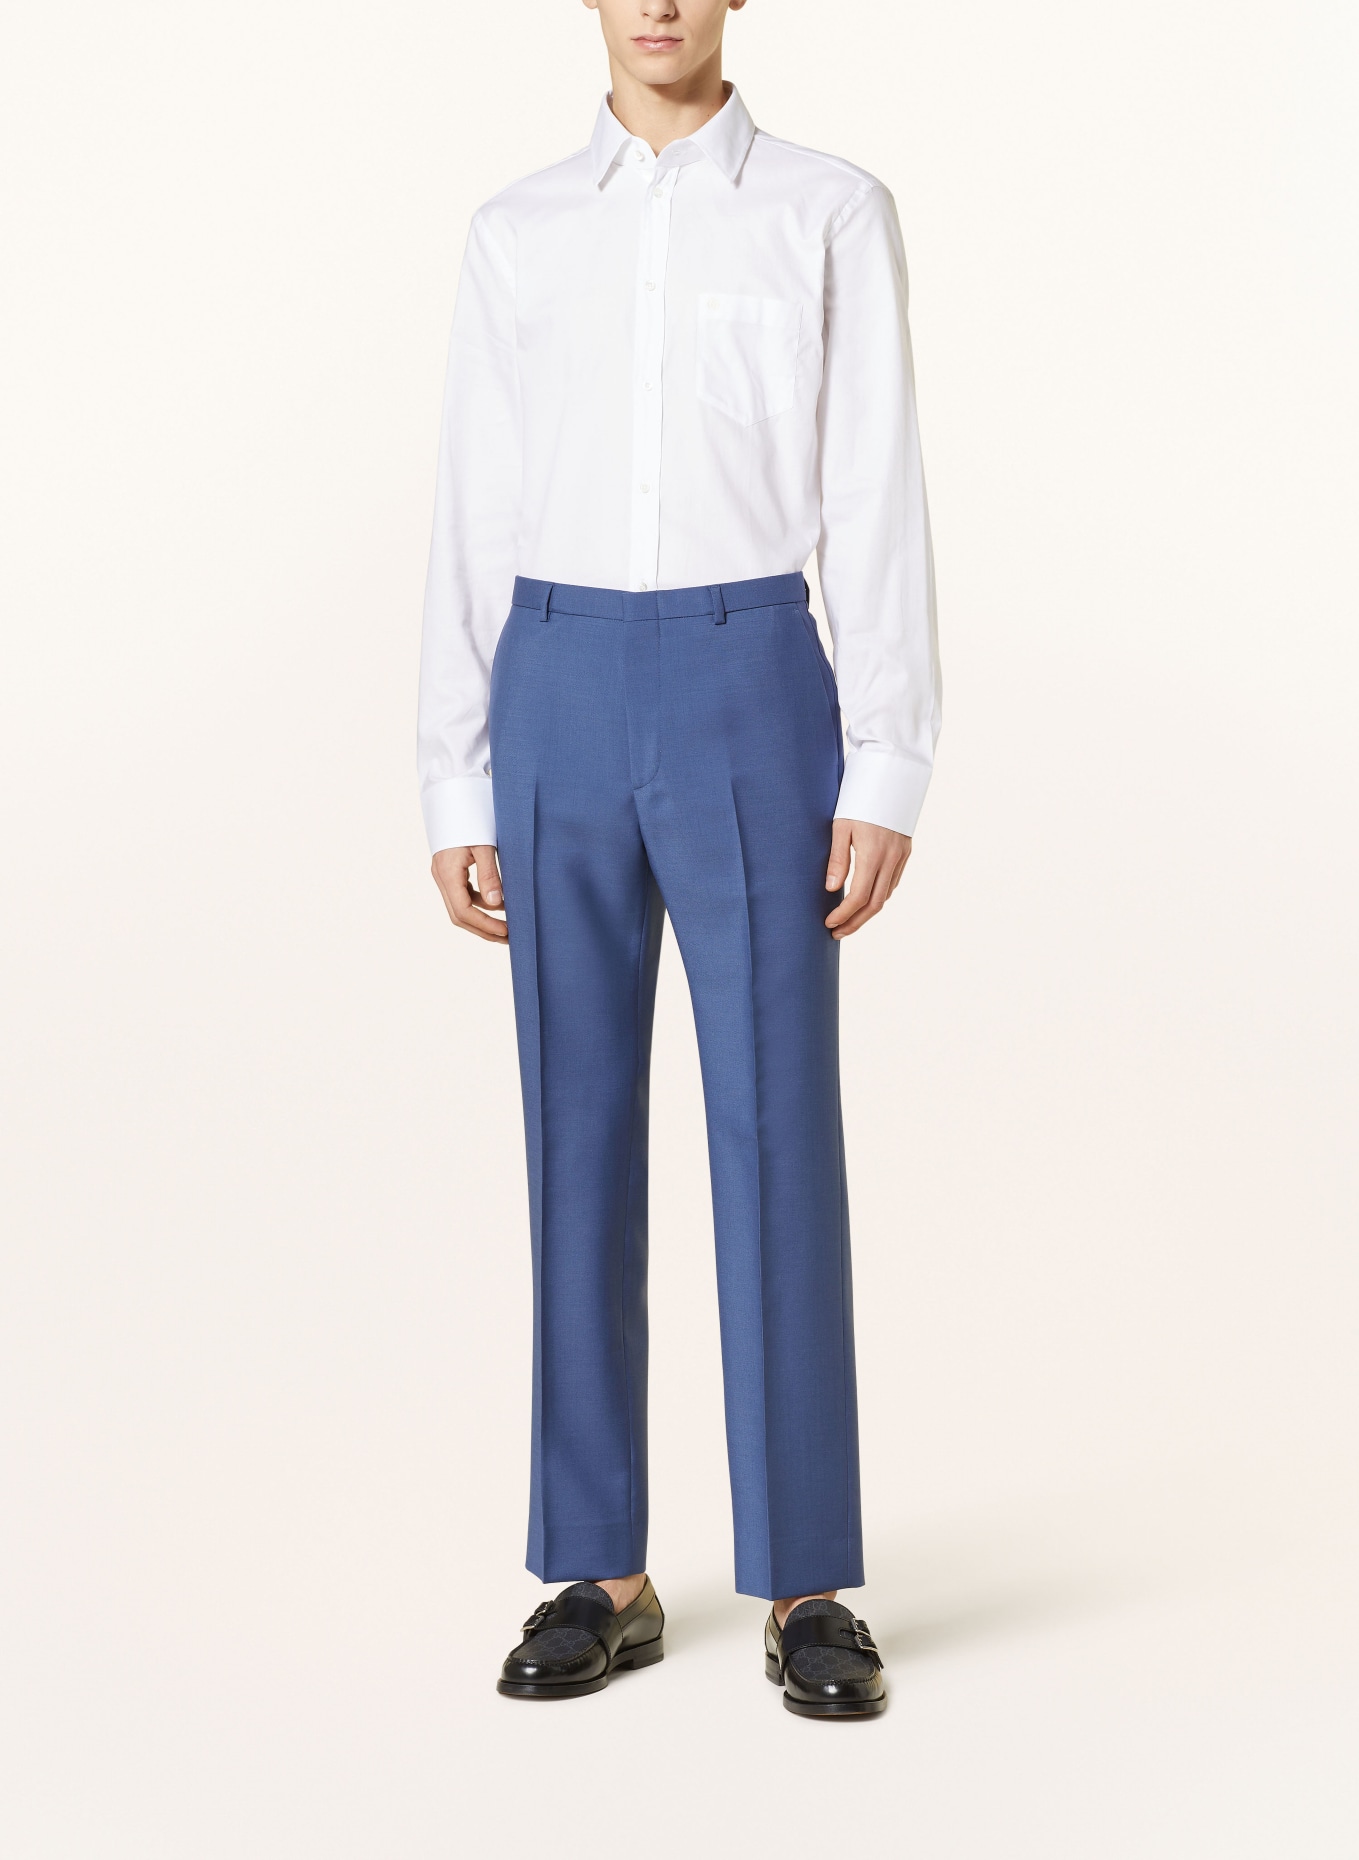 GUCCI Anzughose Slim Fit mit Mohair, Farbe: 4719 STORMY SEA (LIGHT BLUE) (Bild 3)